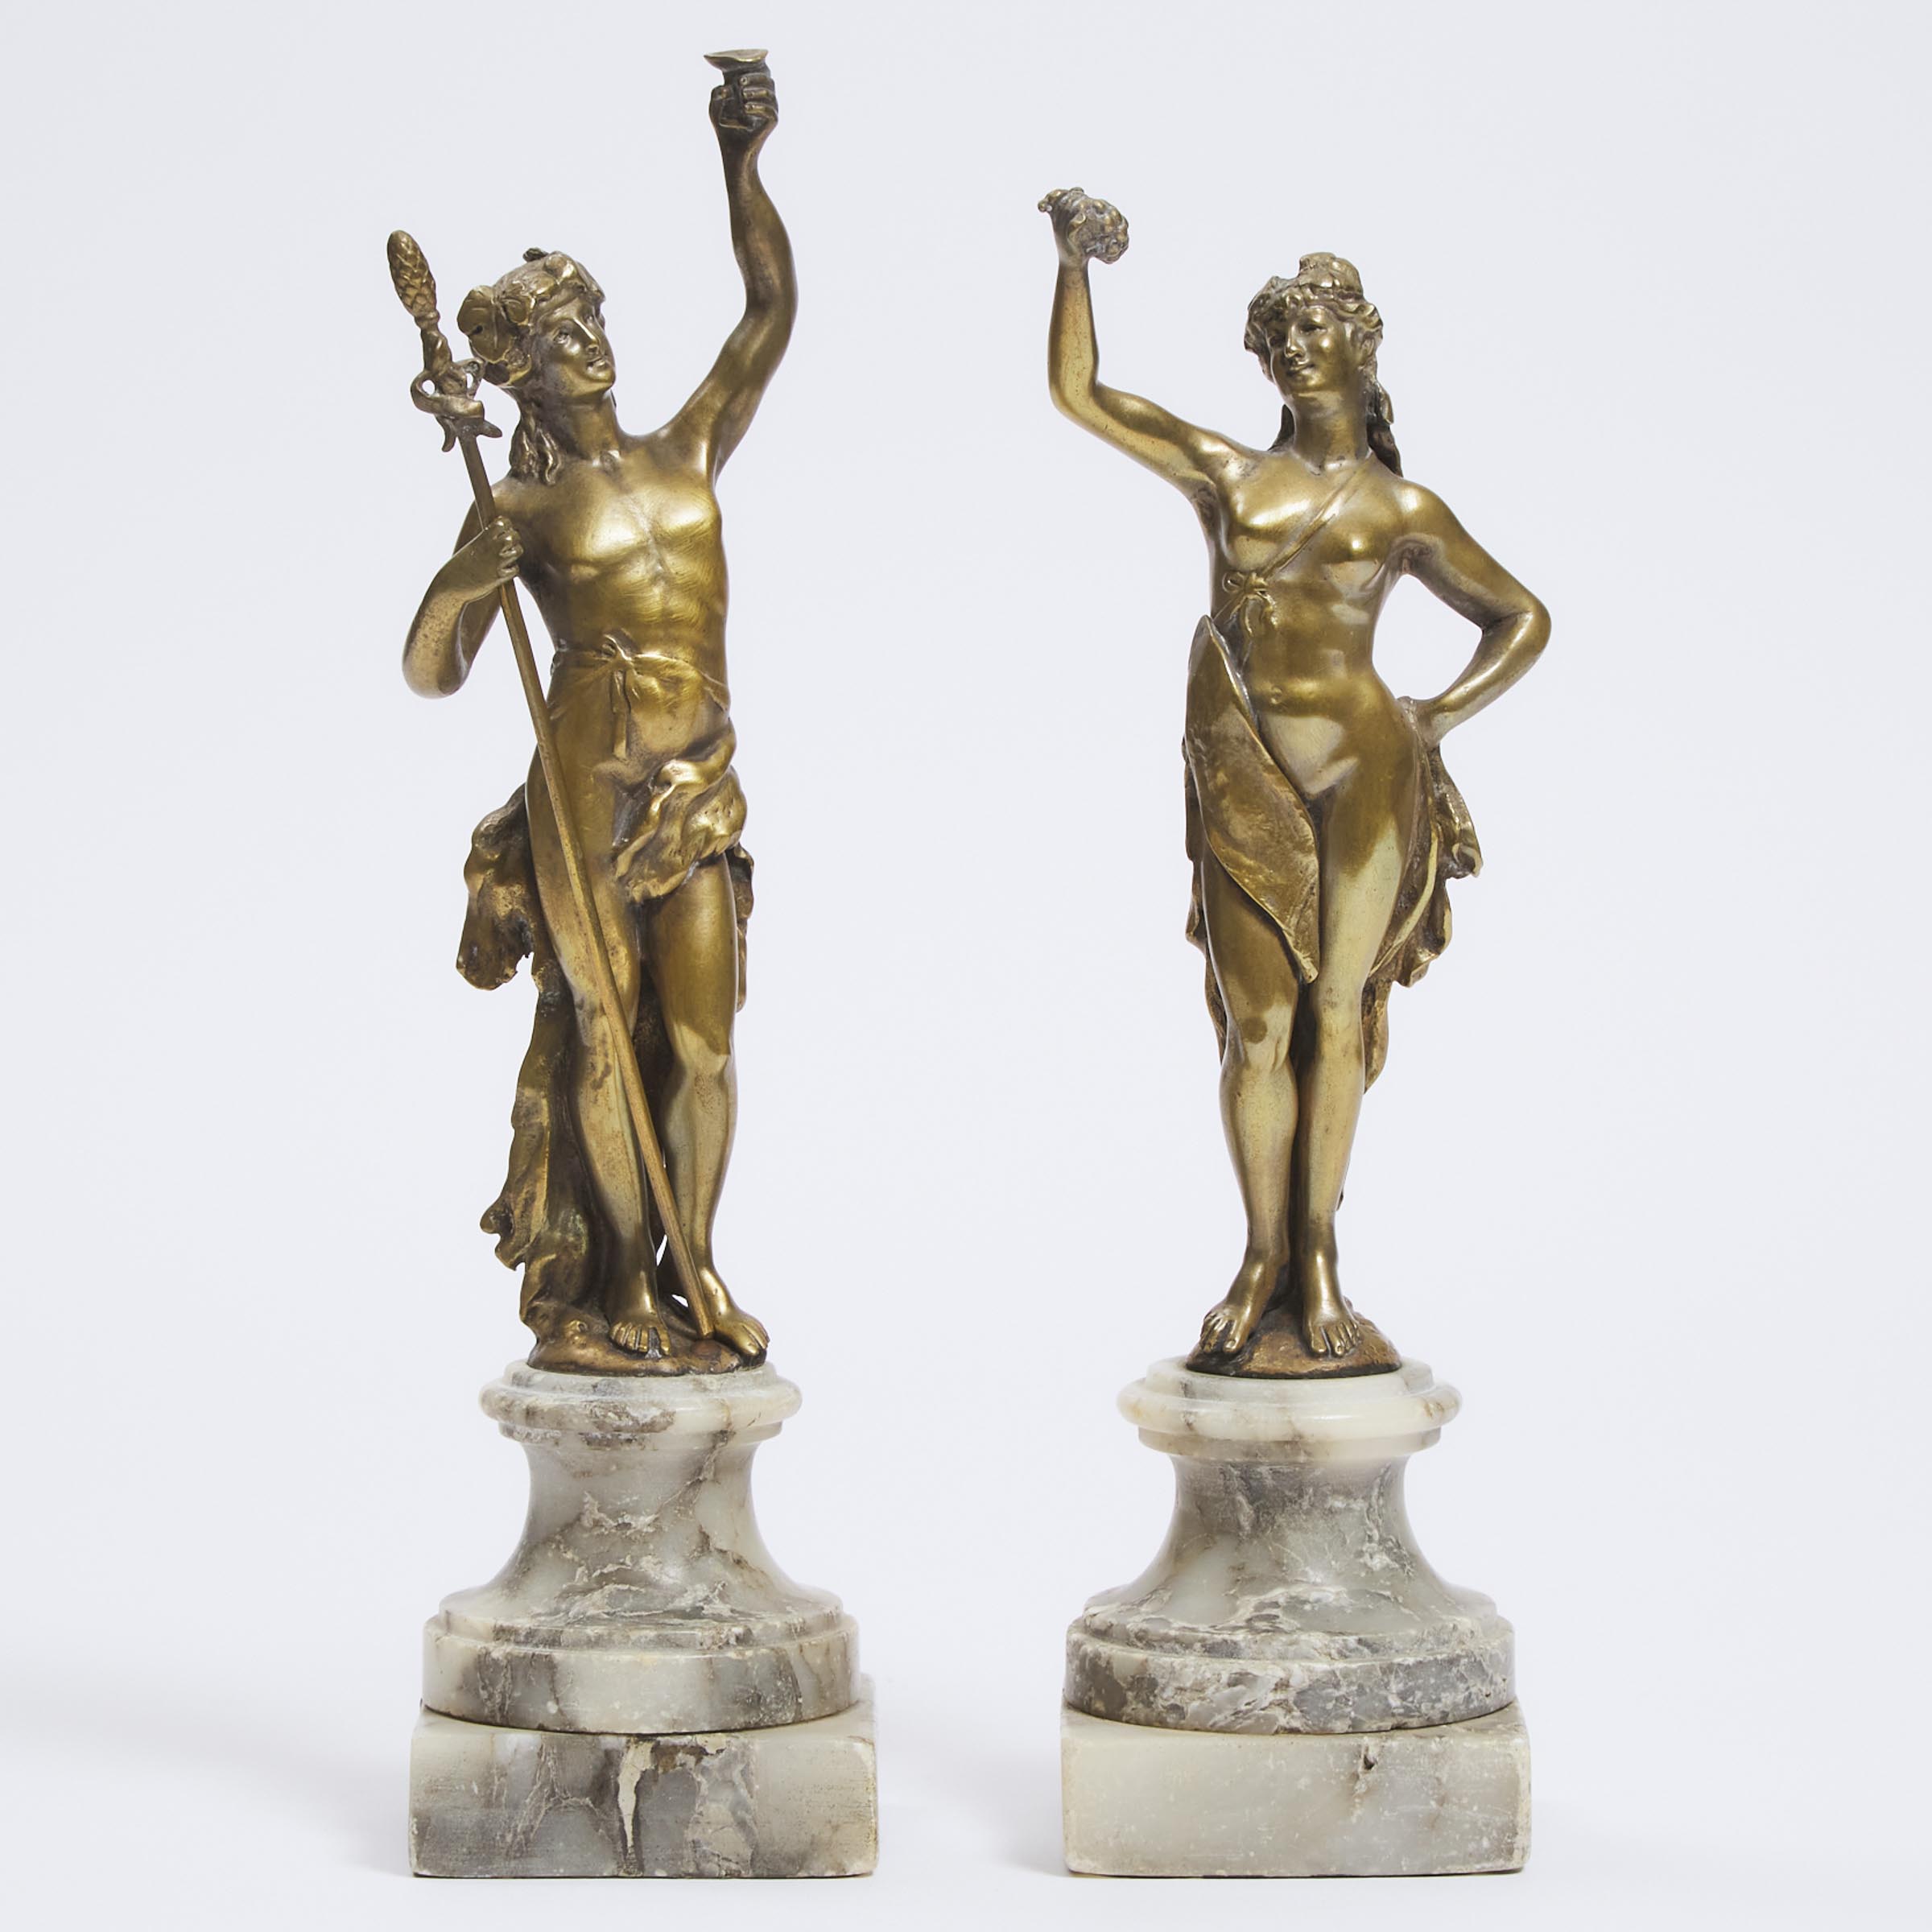 Pair of Italian Gilt Bronze Bacchanalian Figures, 19th century